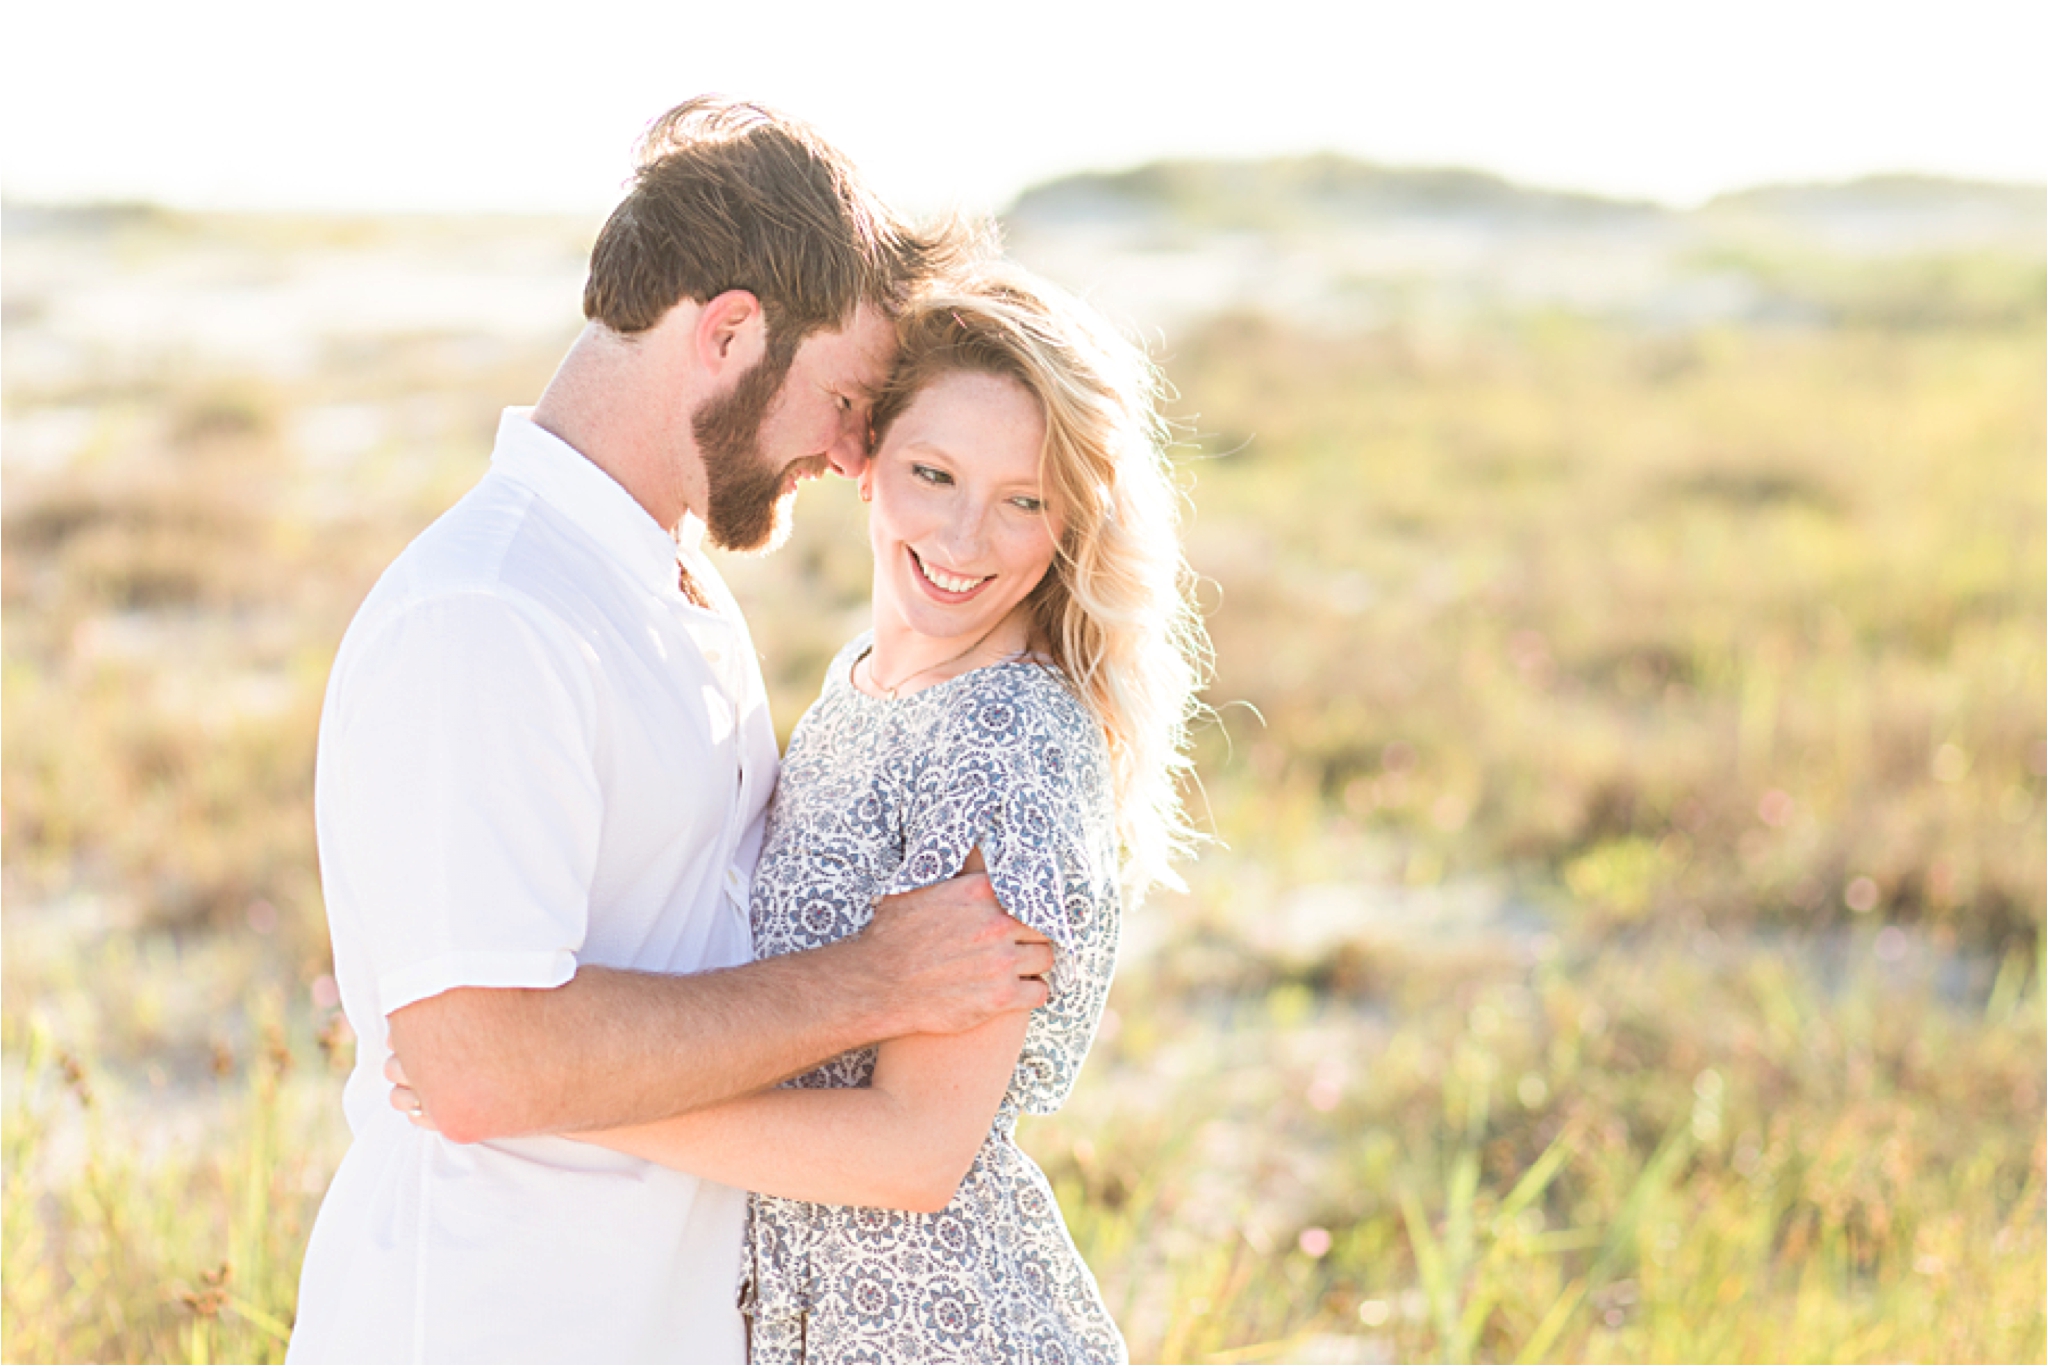 Romantic Dauphin Island Engagement Photos | Chase & Lorin